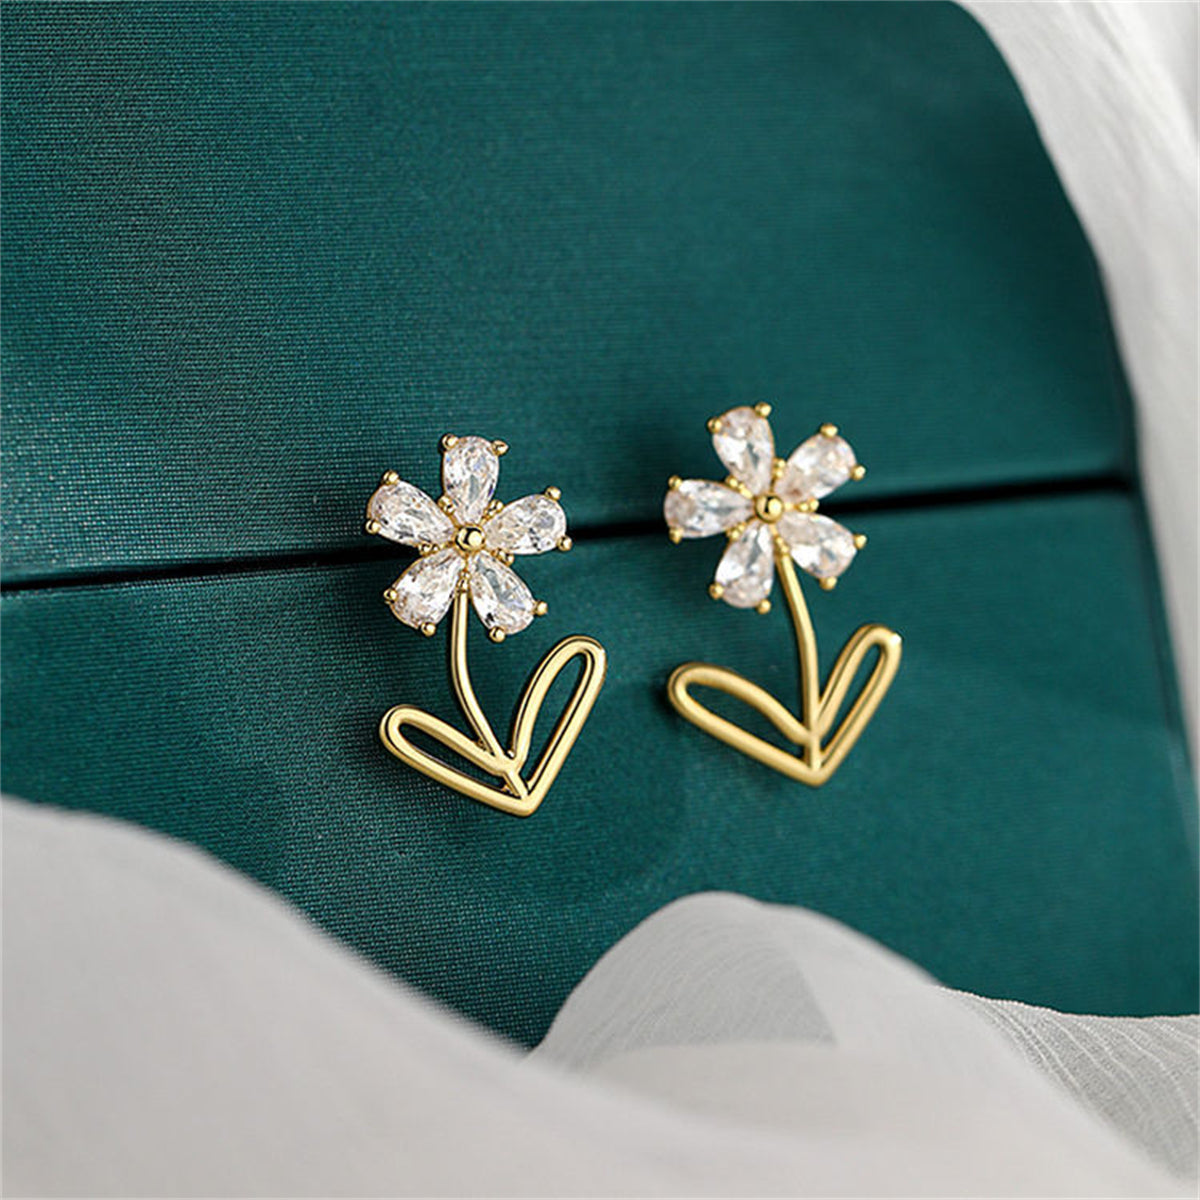 Crystal & 18K Gold-Plated Flower Stud Earrings